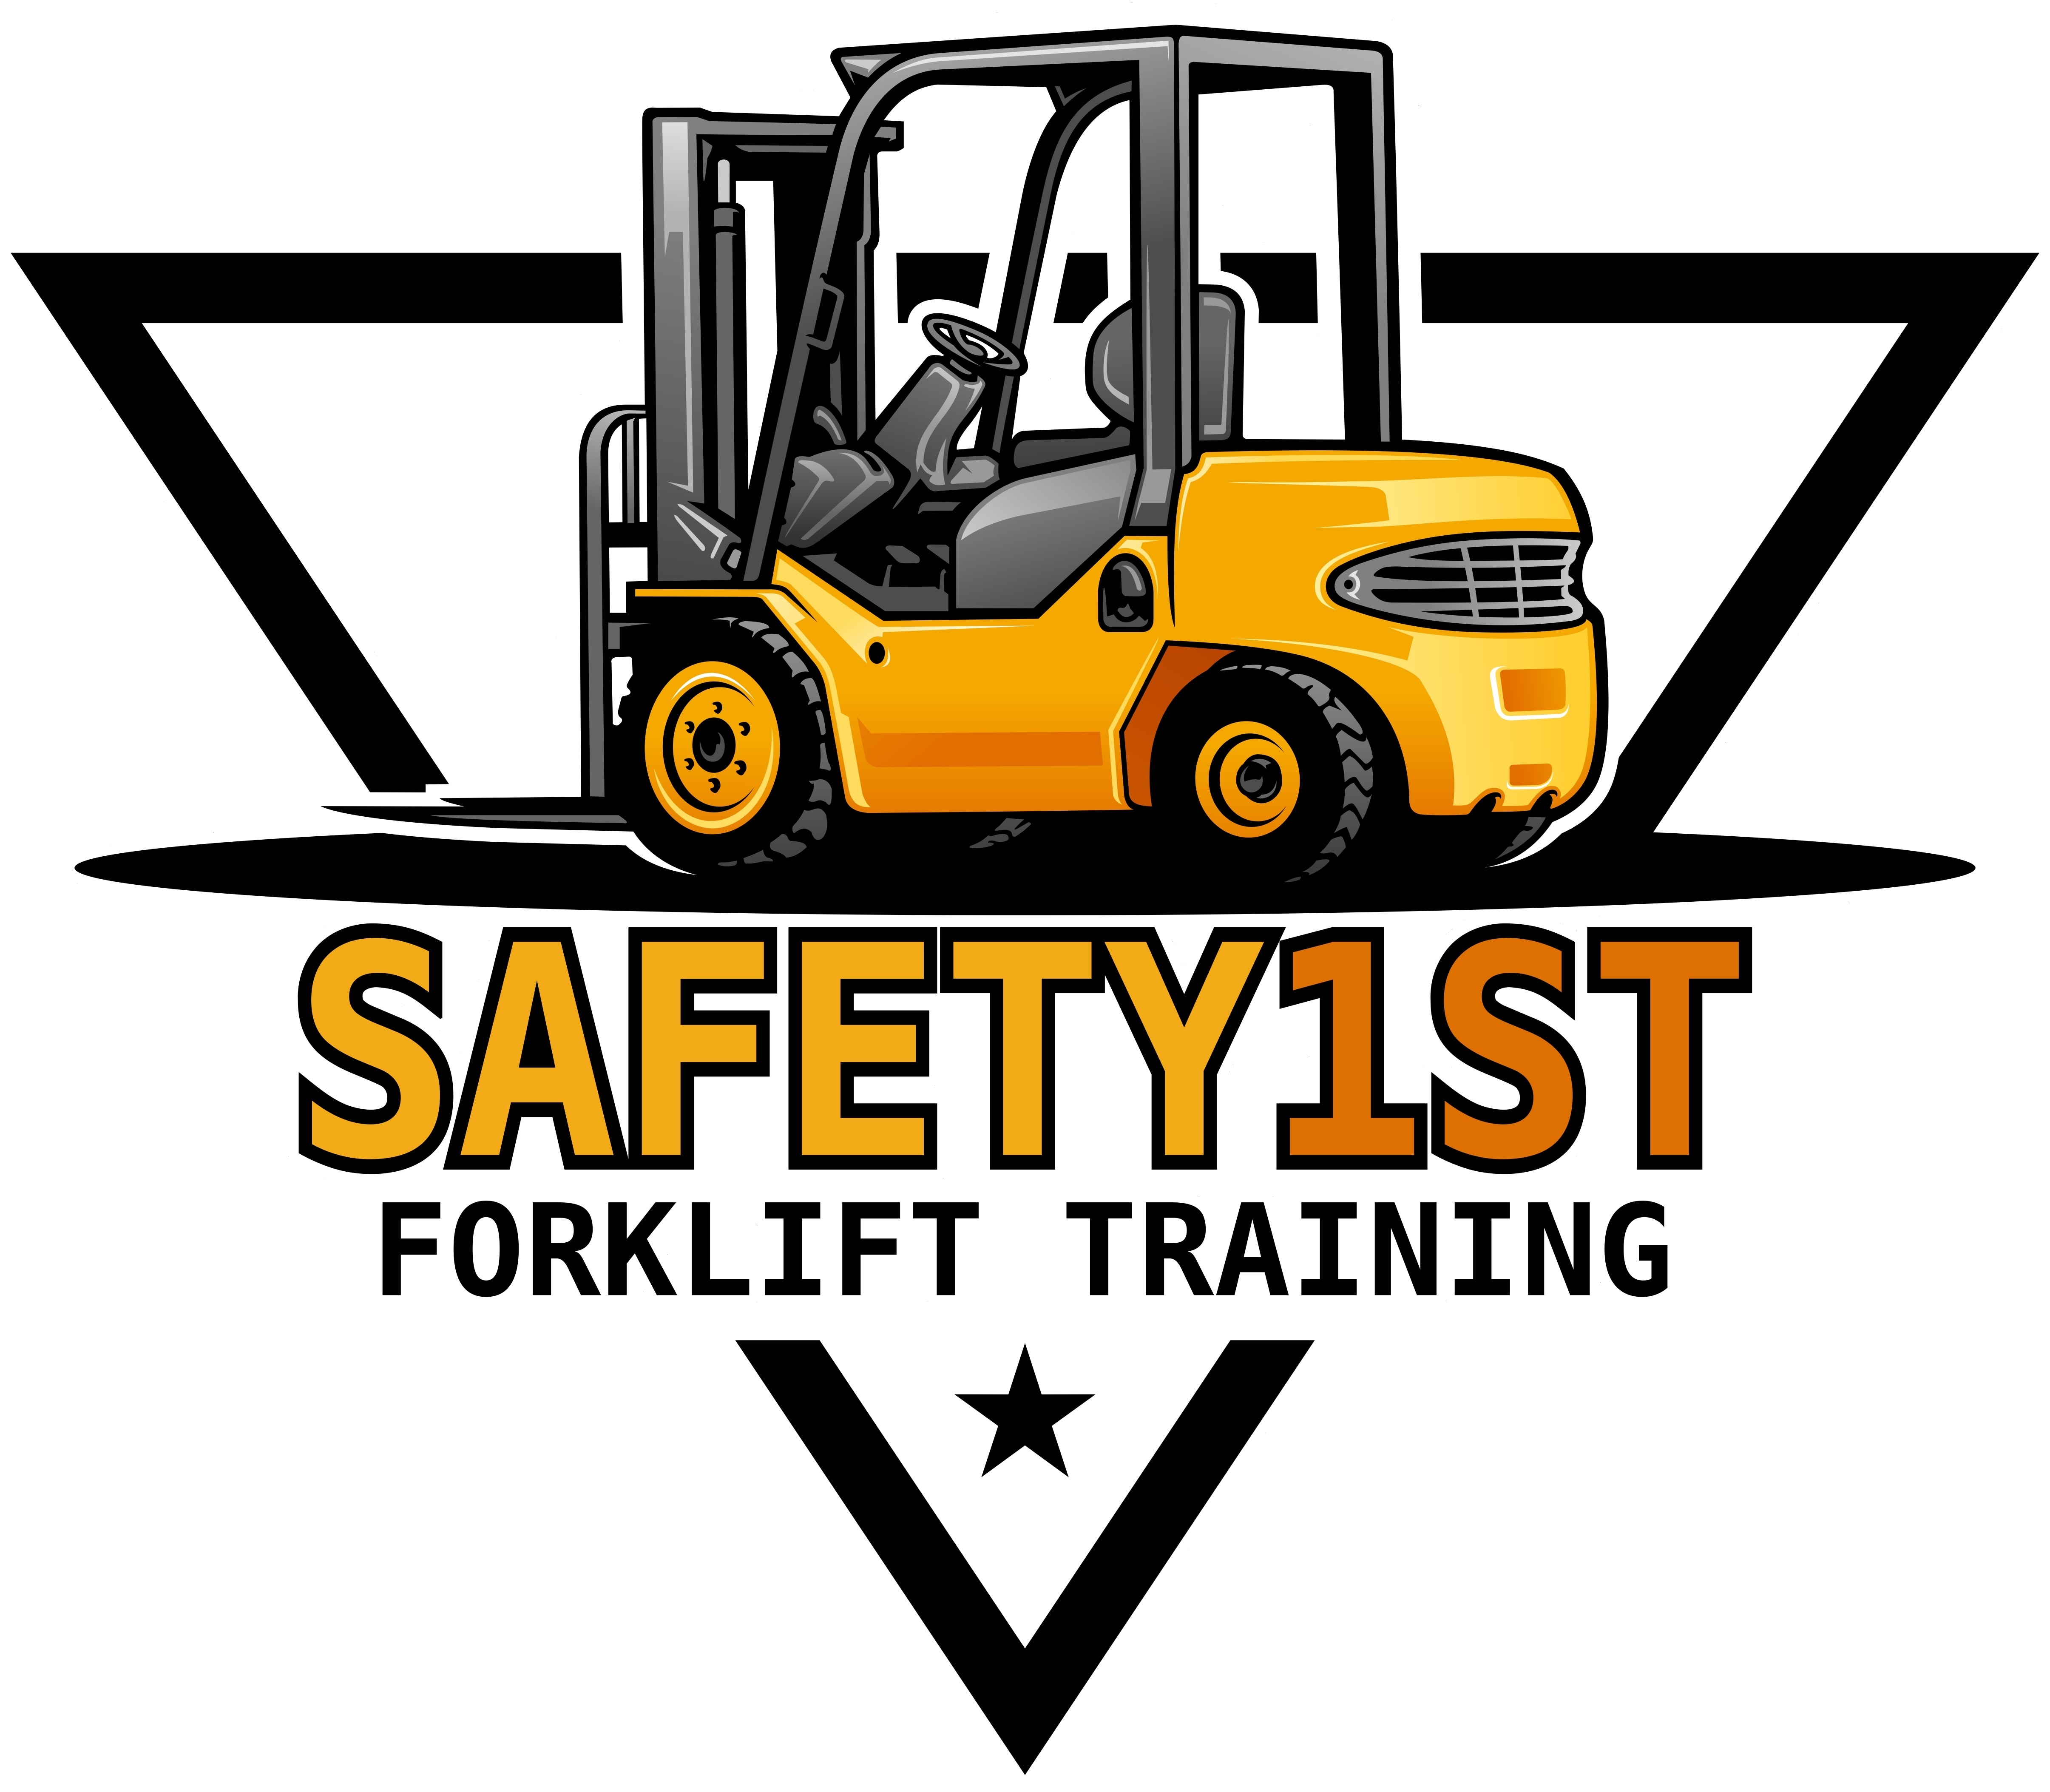 Safety 1st Forklift Training